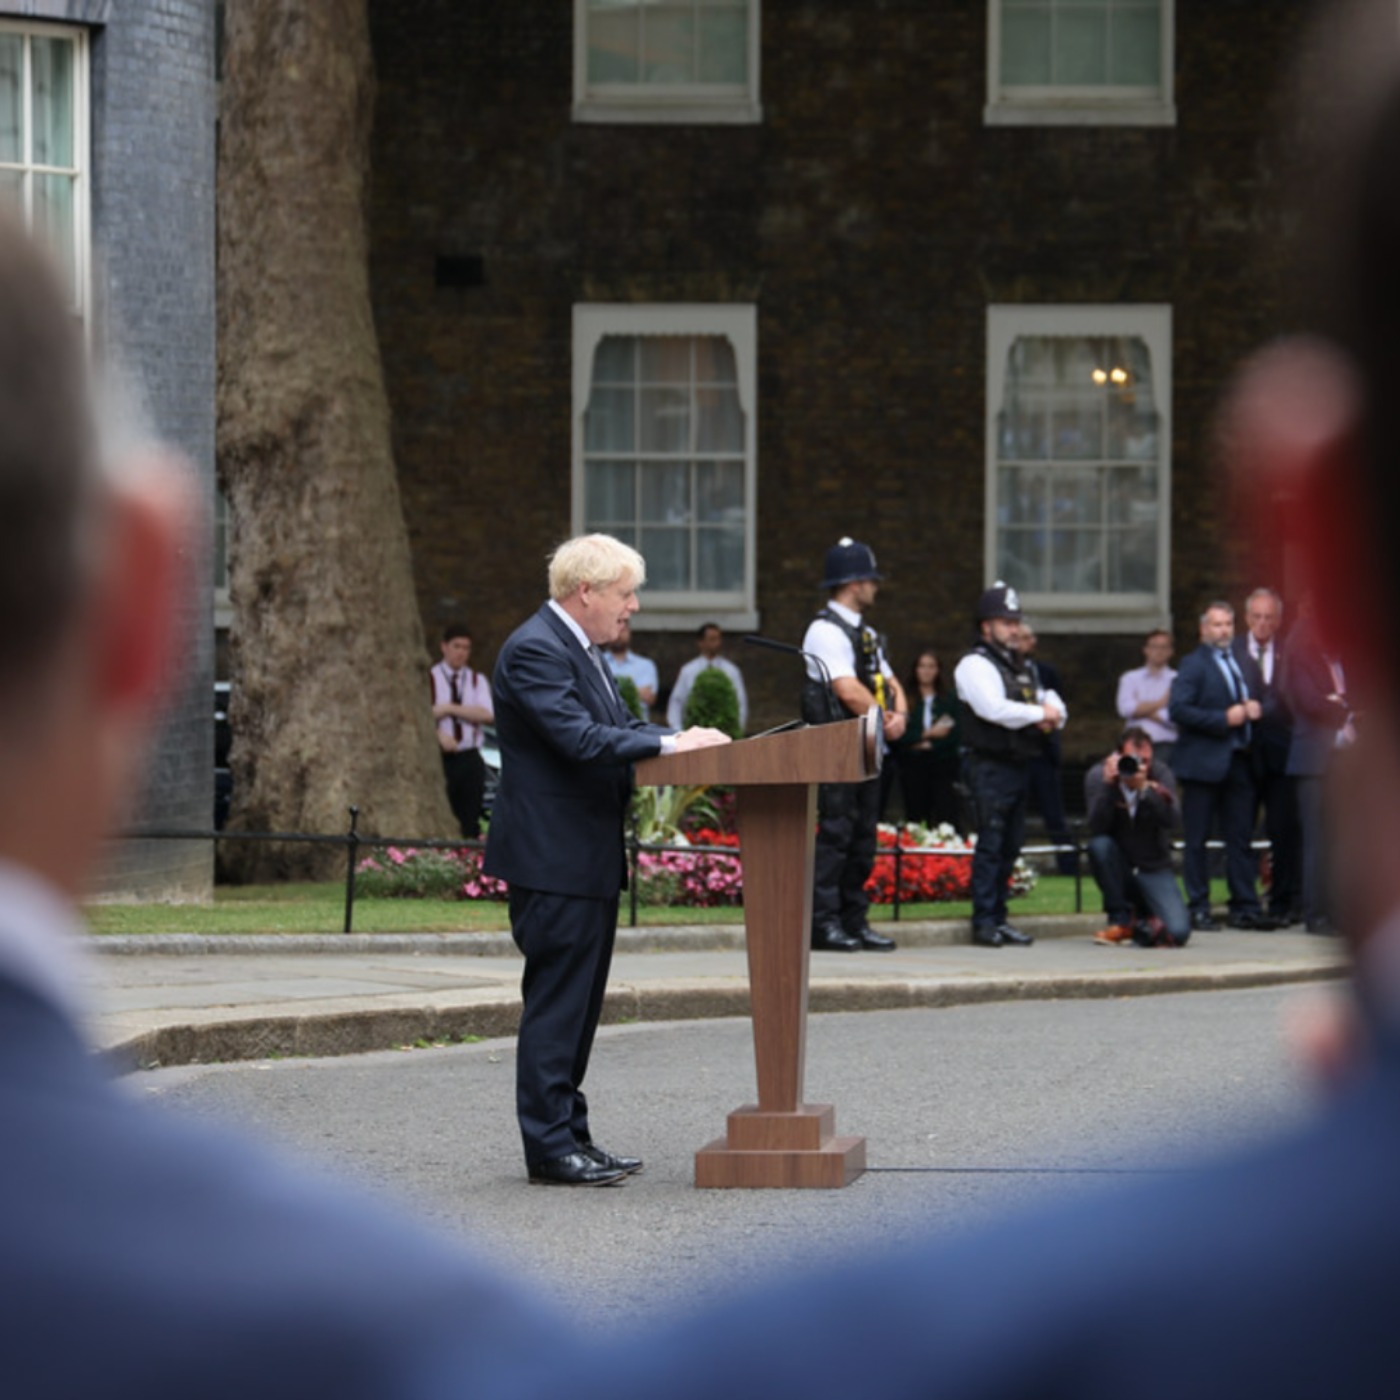 777. The Rick Thompson Report: Has Boris Johnson Resigned?